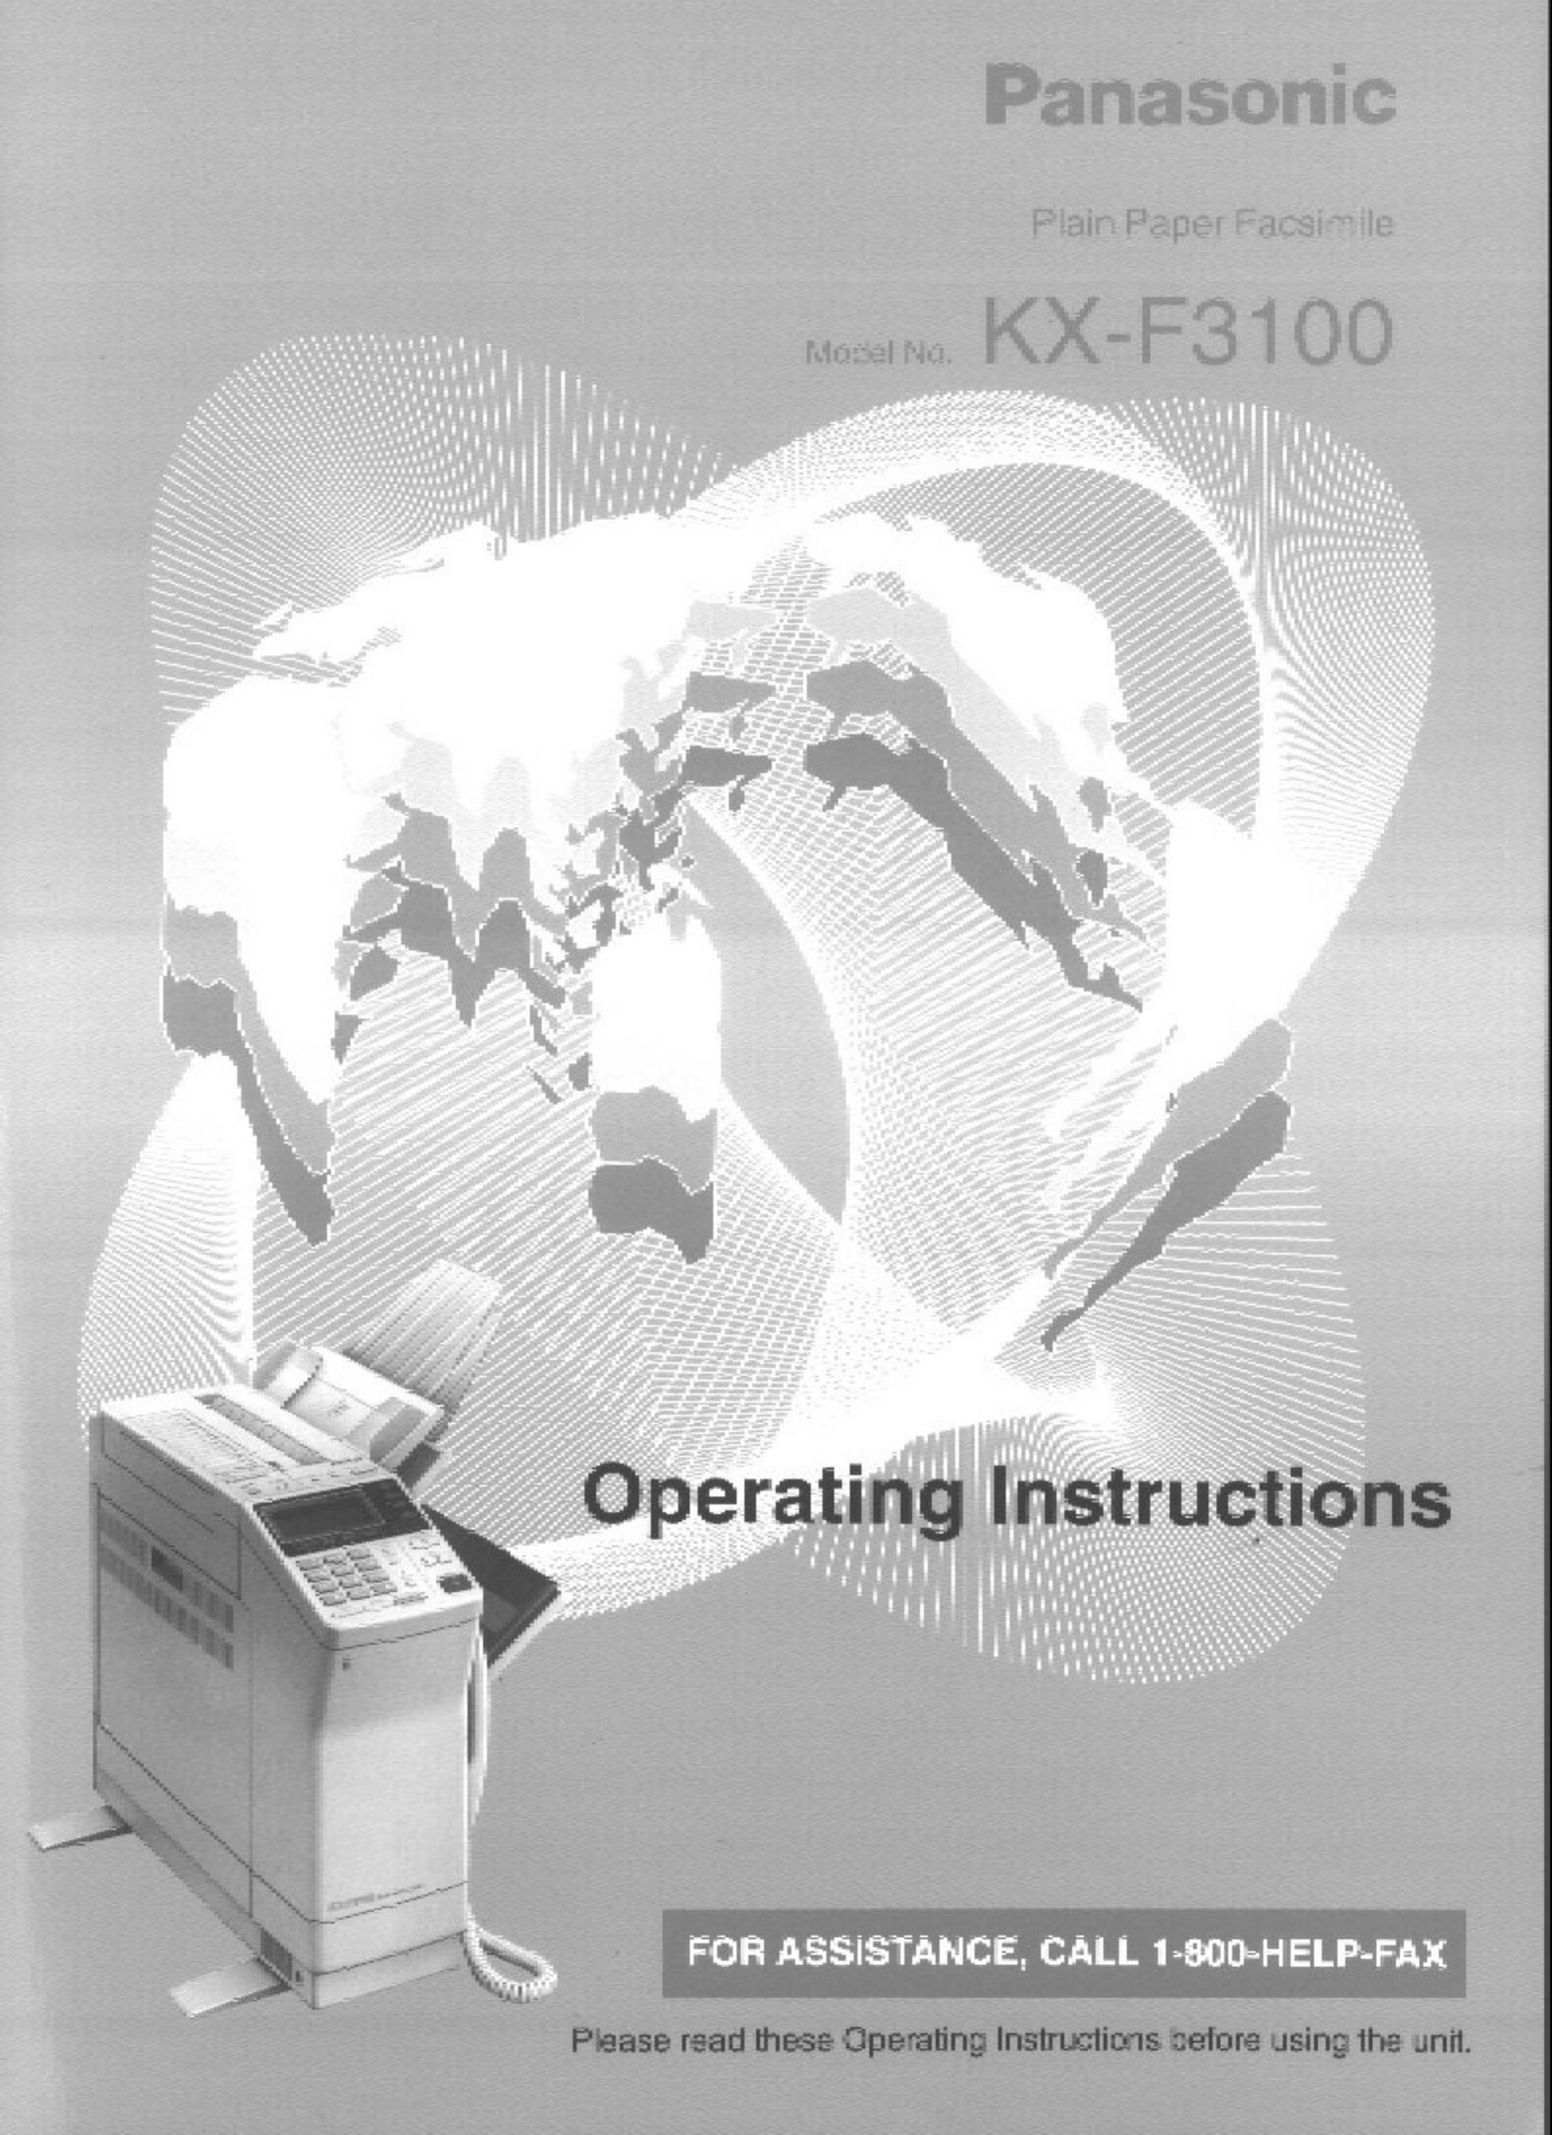 Panasonic KX-F3100 Fax Machine User Manual